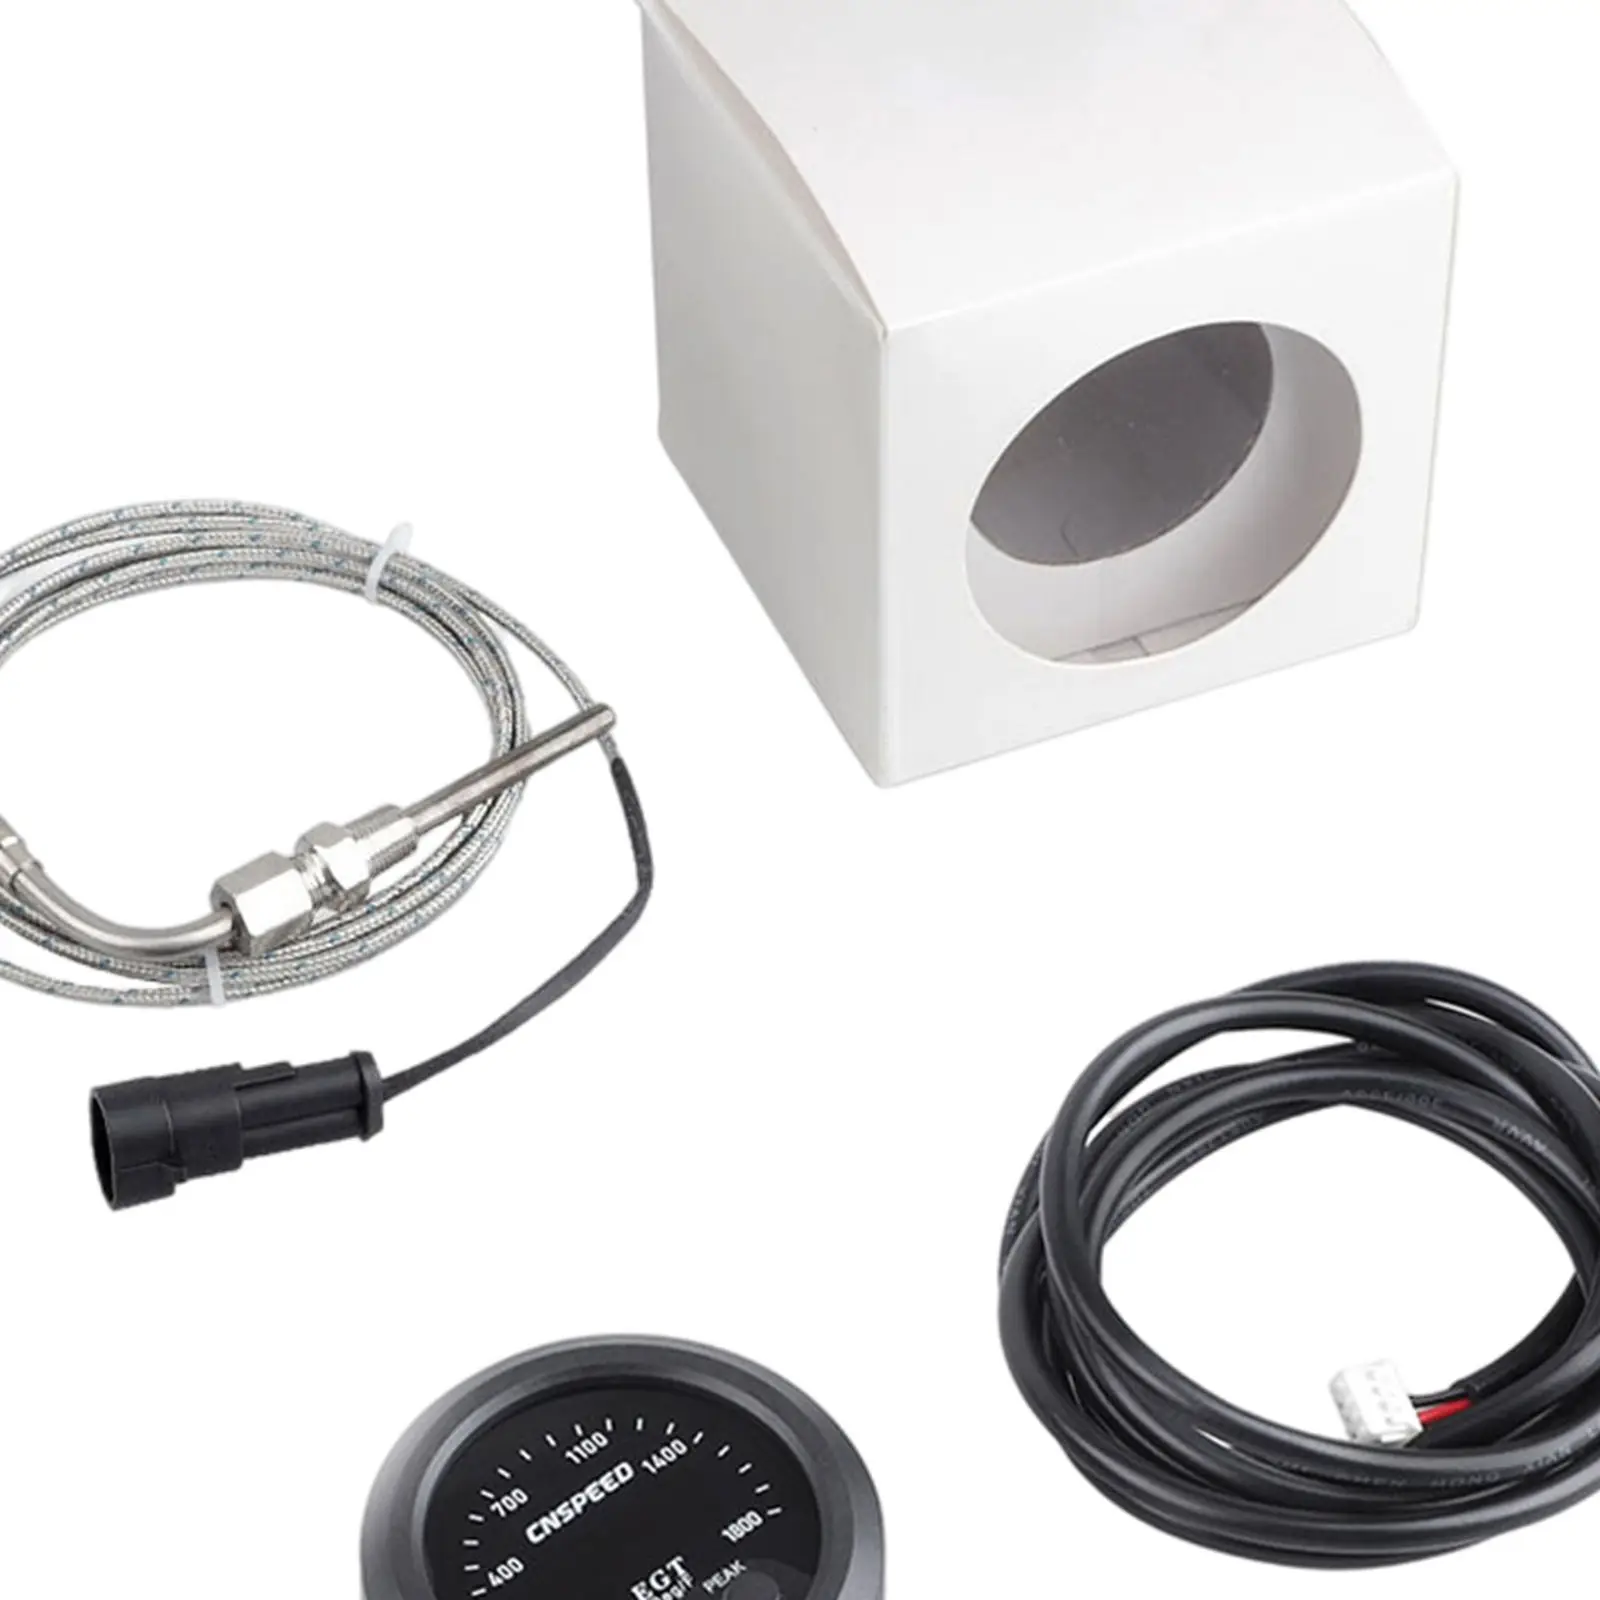 Exhaust Gas Temperature Gauge Kit Black Dial 1800 F Pyrometer Thin Temperature Meter Temp Gauge for Oil Transmission Temp